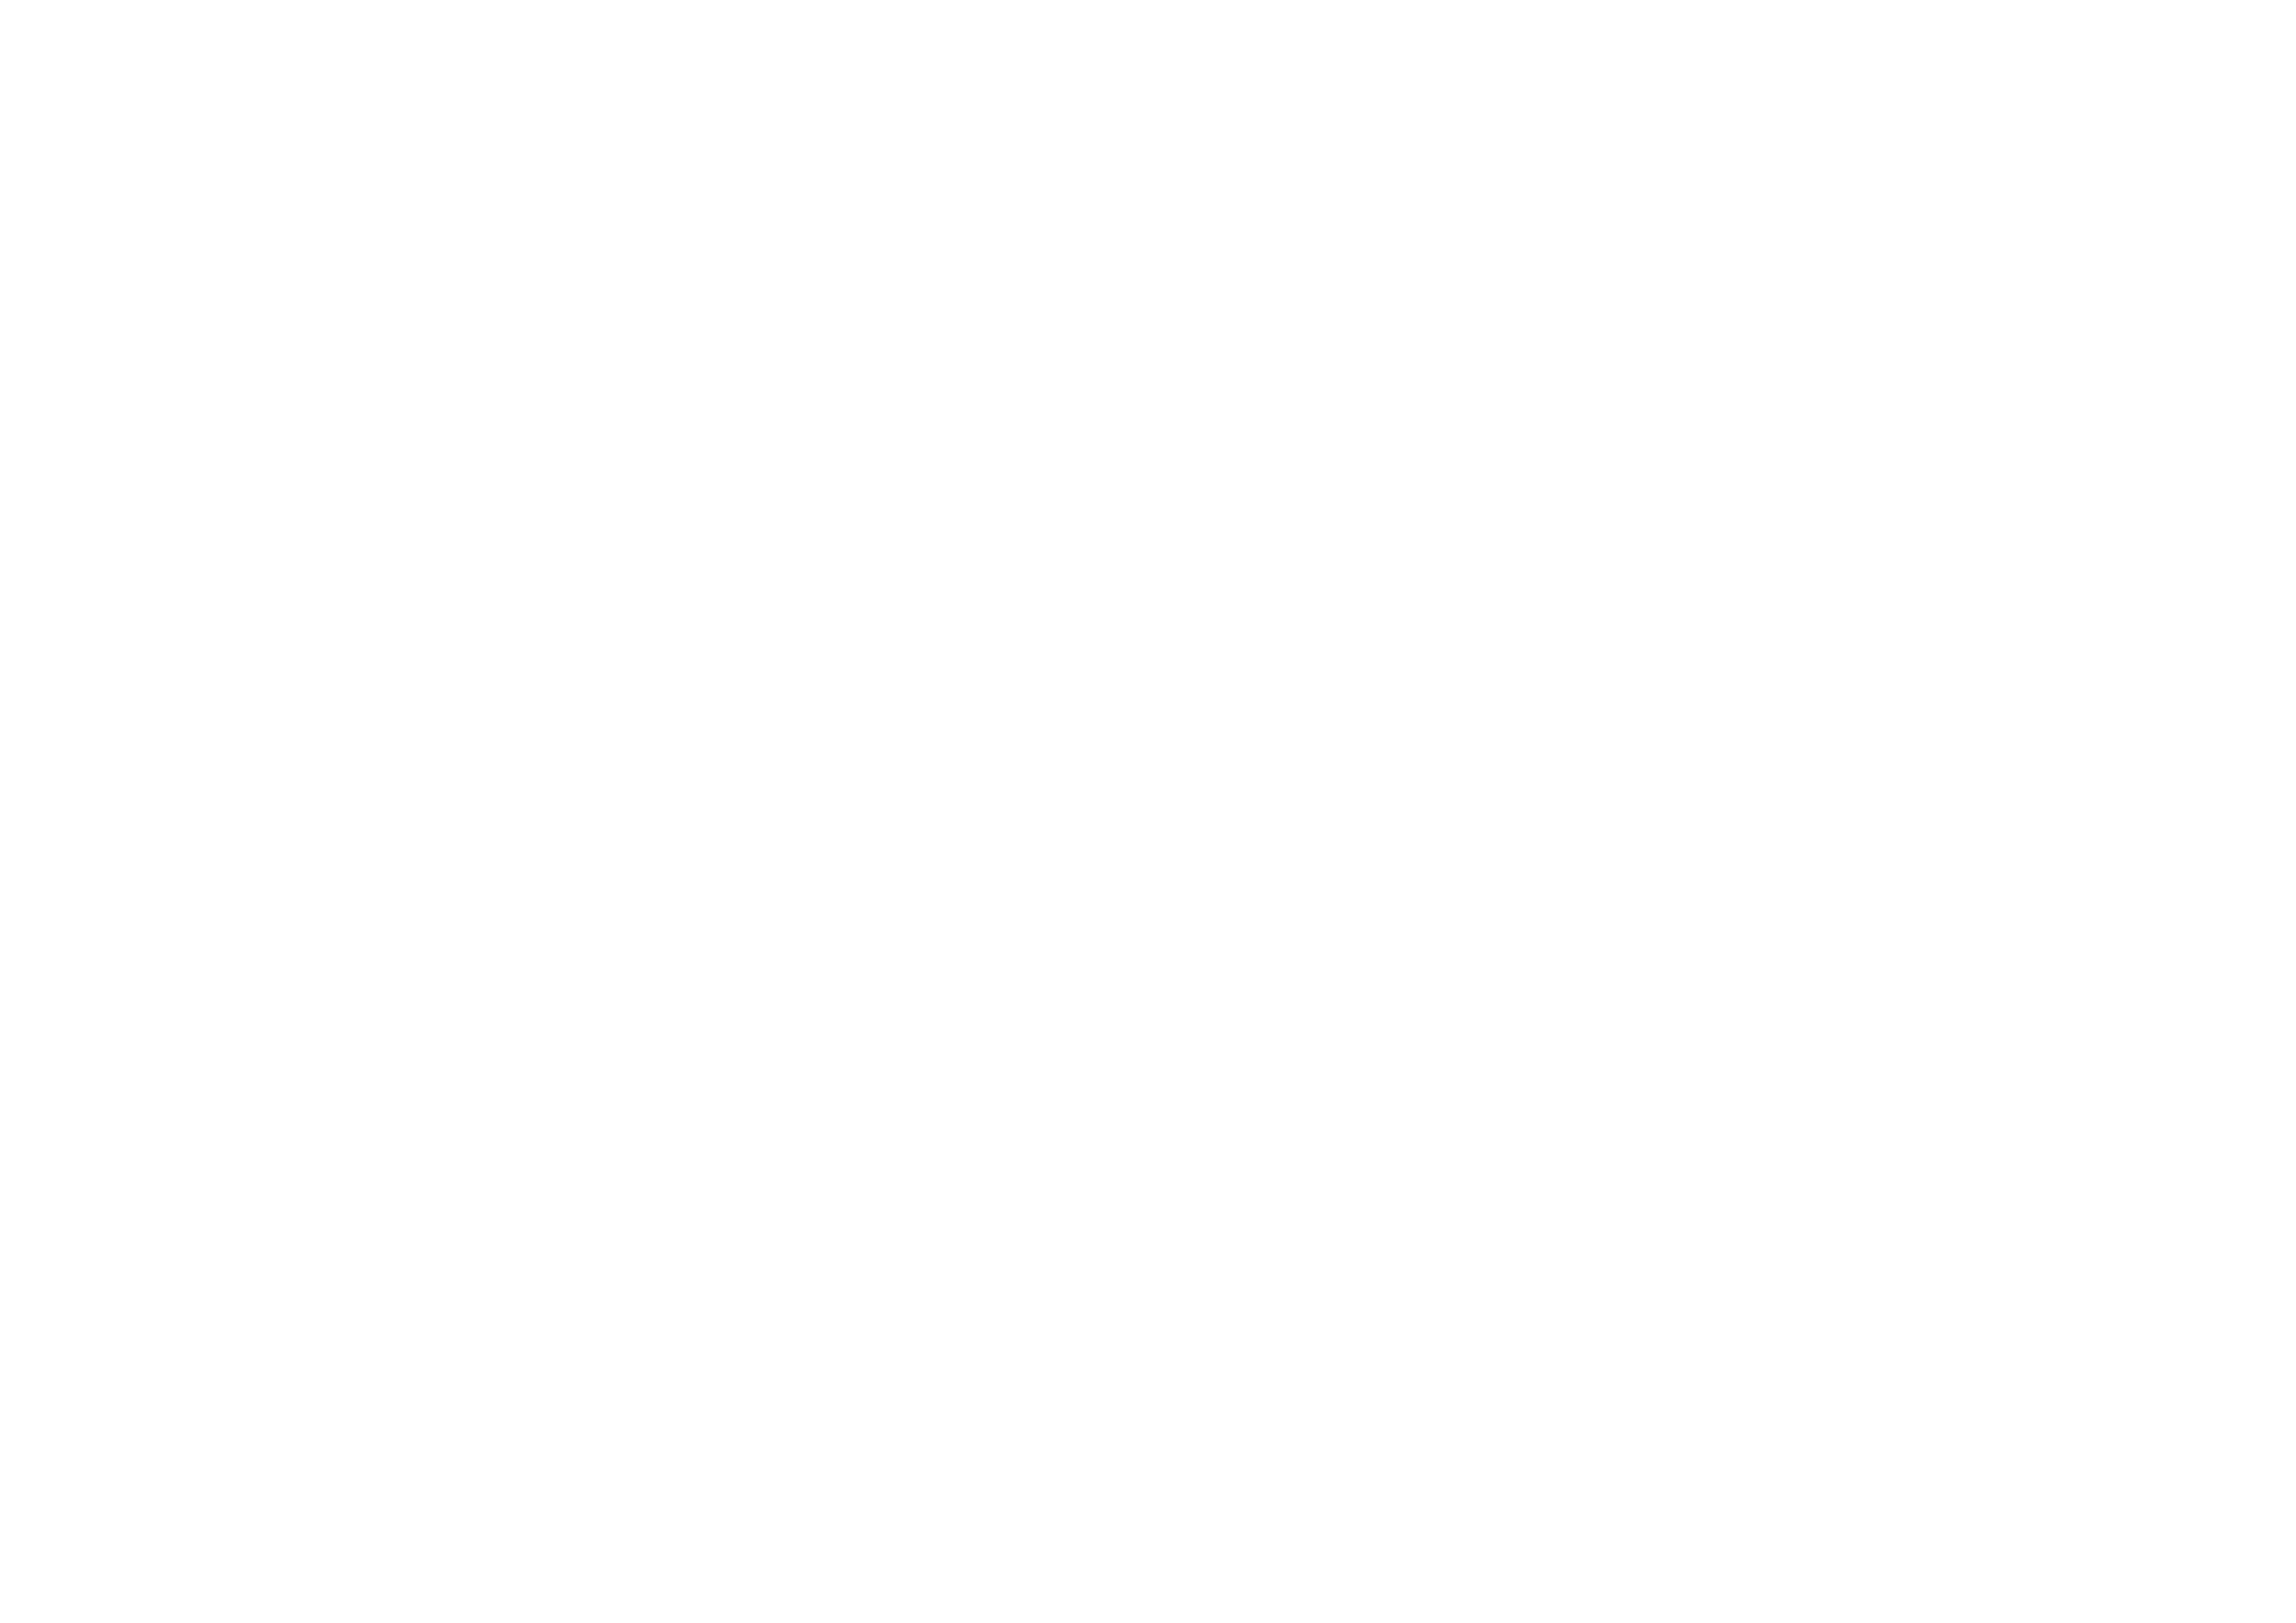 Linkers